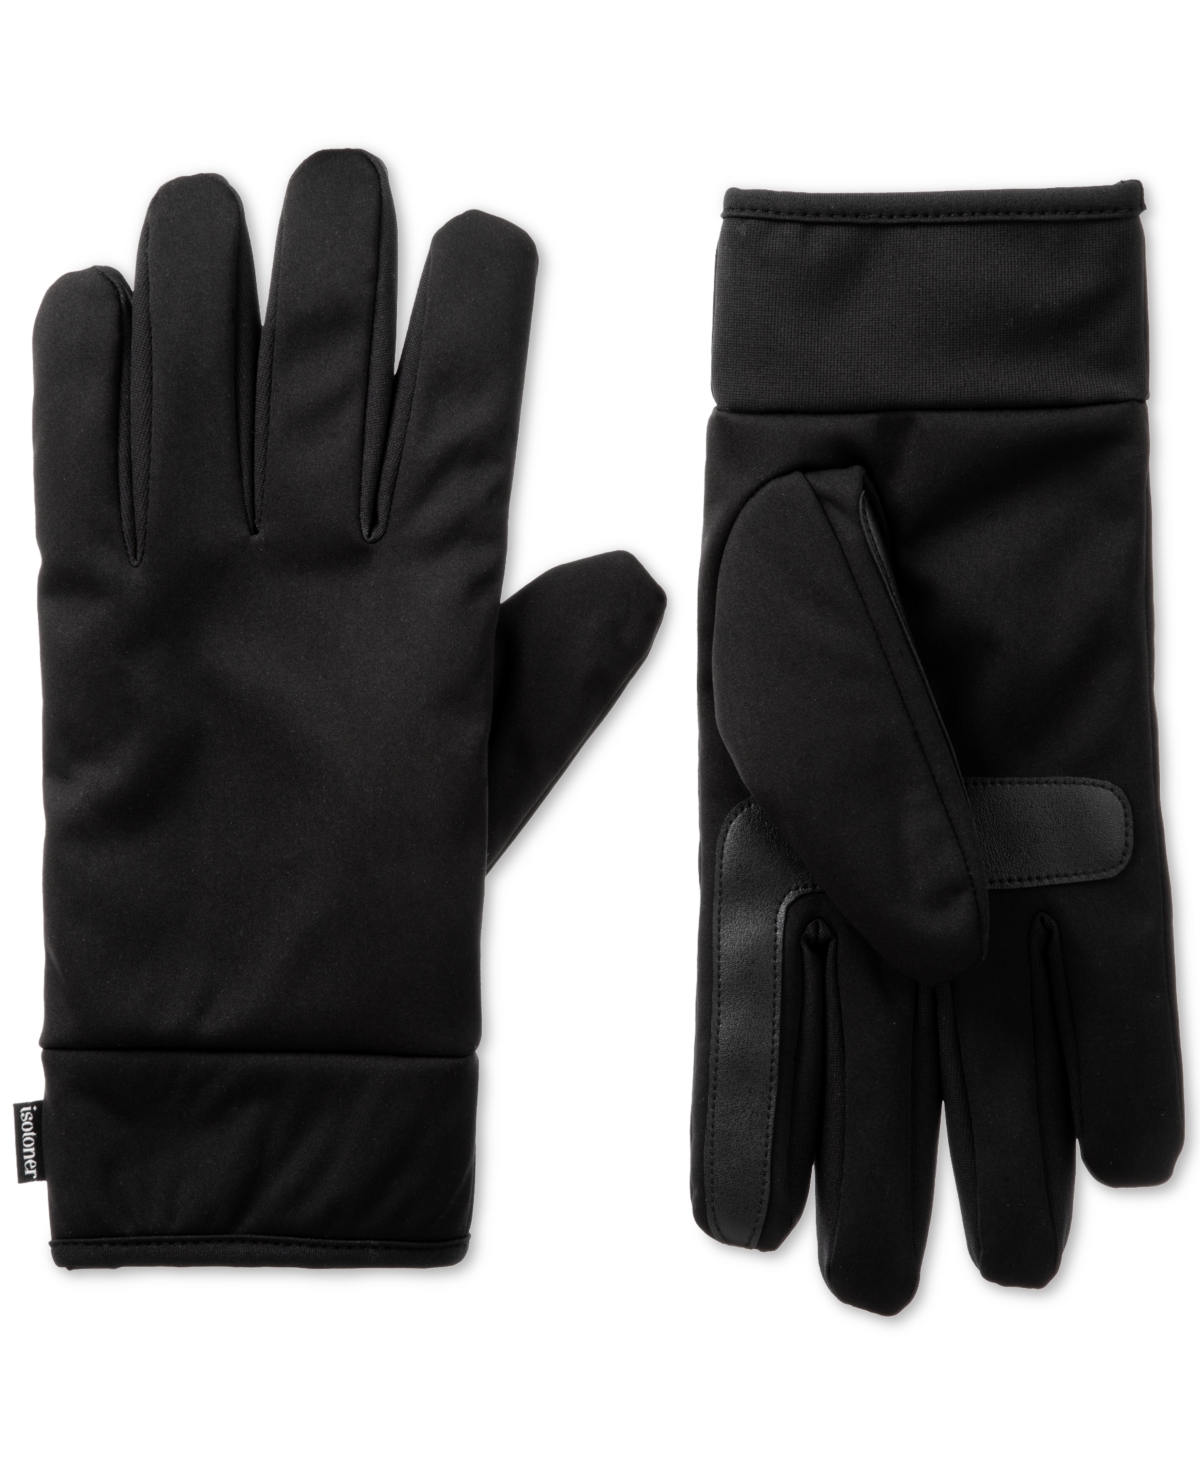 Men's smartDRI smarTouch Gloves - Black